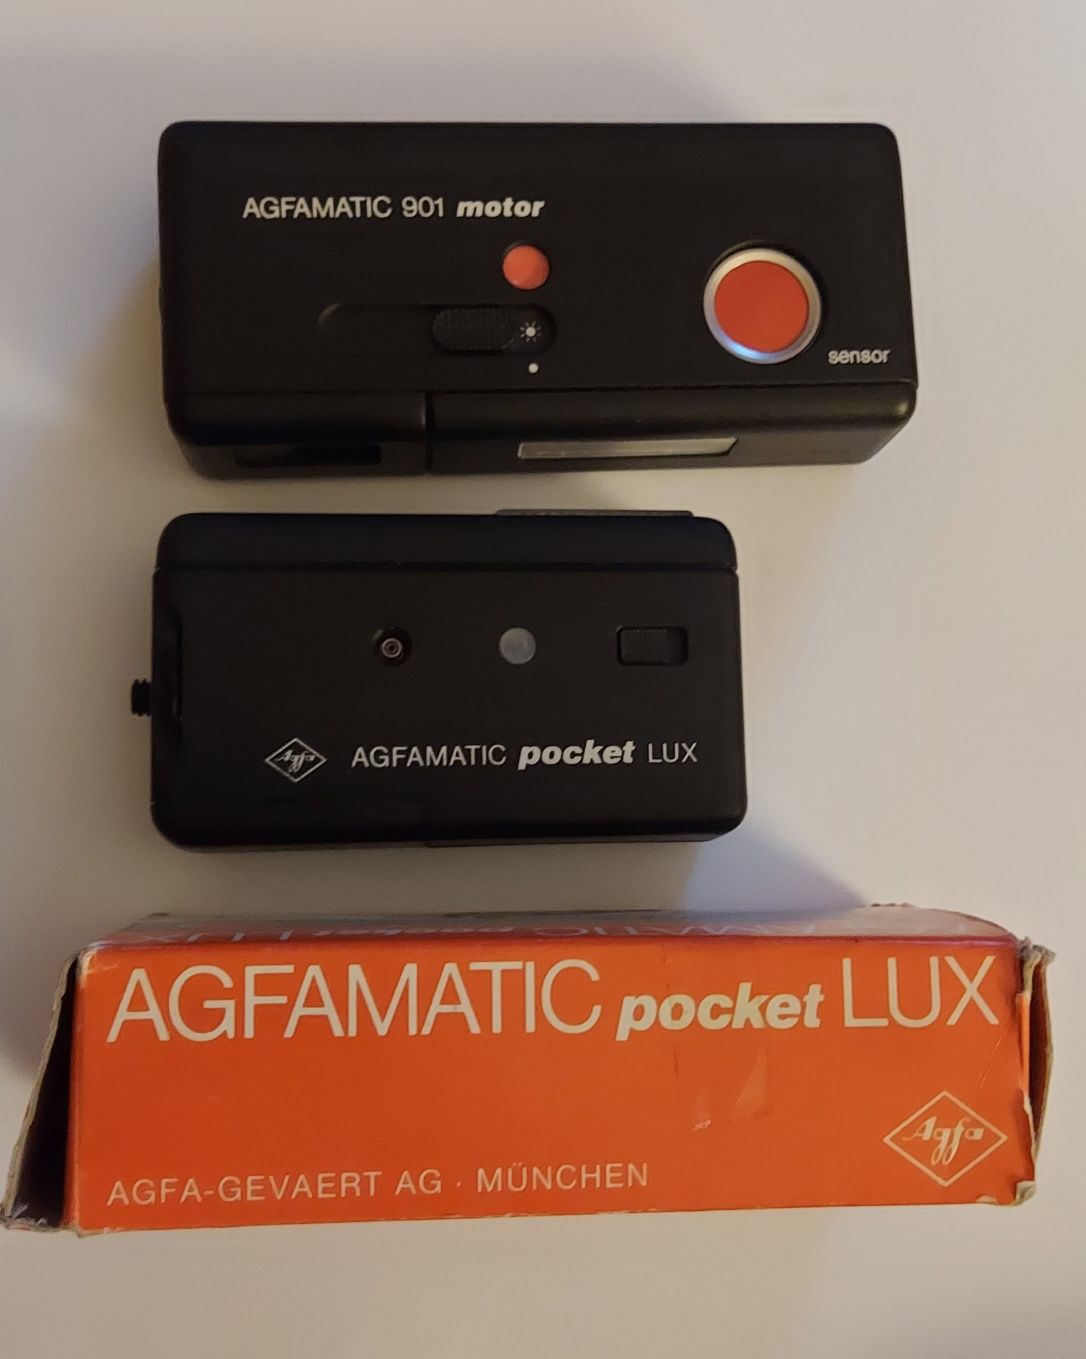 3 aparaty na filmy 110, Revue Pocket, AlfoTronic, Agfamatic 901